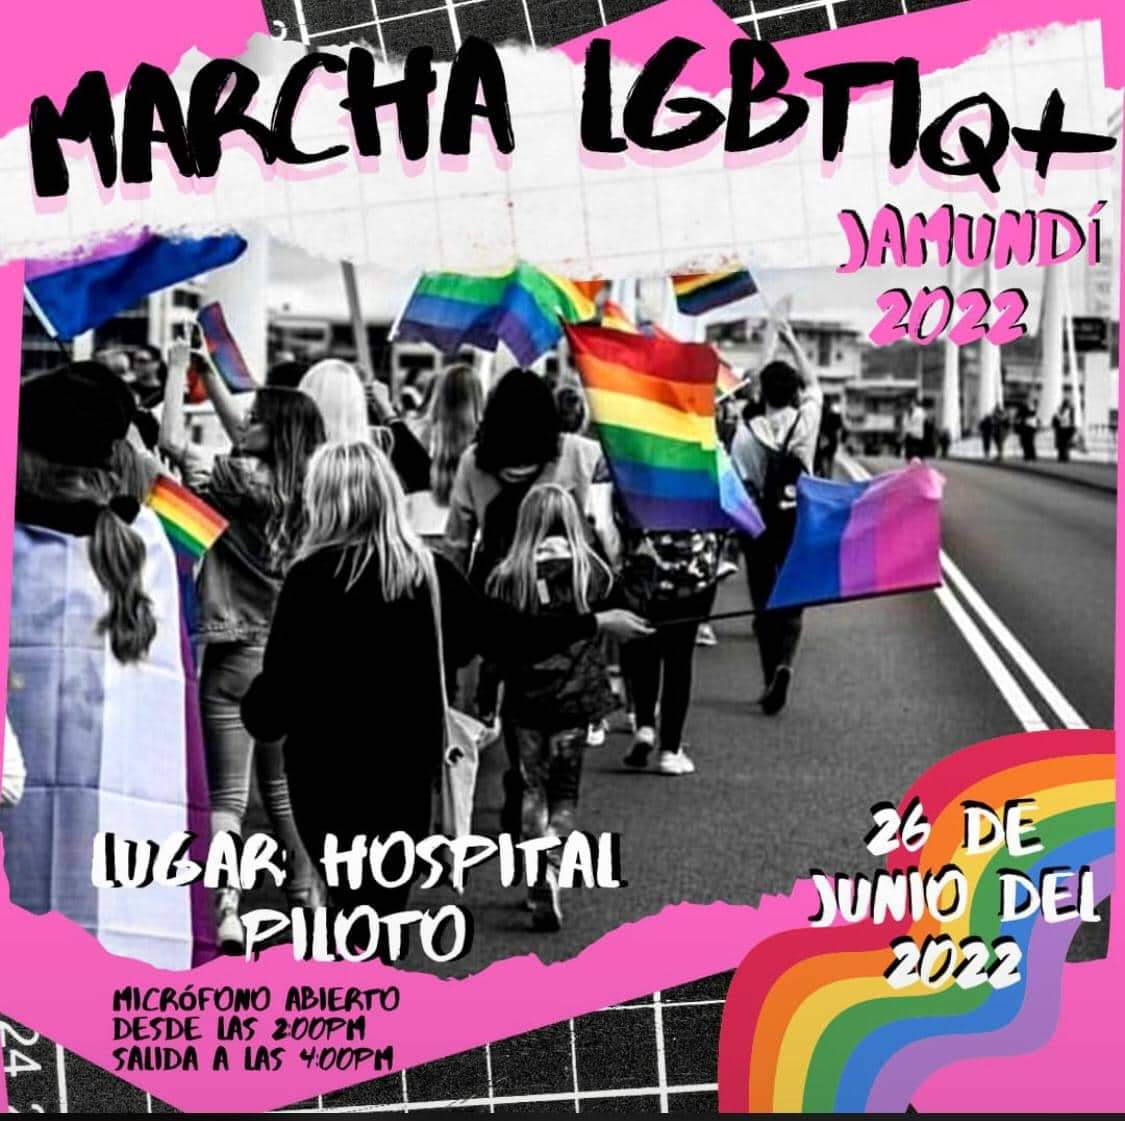  Marcha LGBTIQ+ Jamundi 2022 [JAMUNDÍ] 